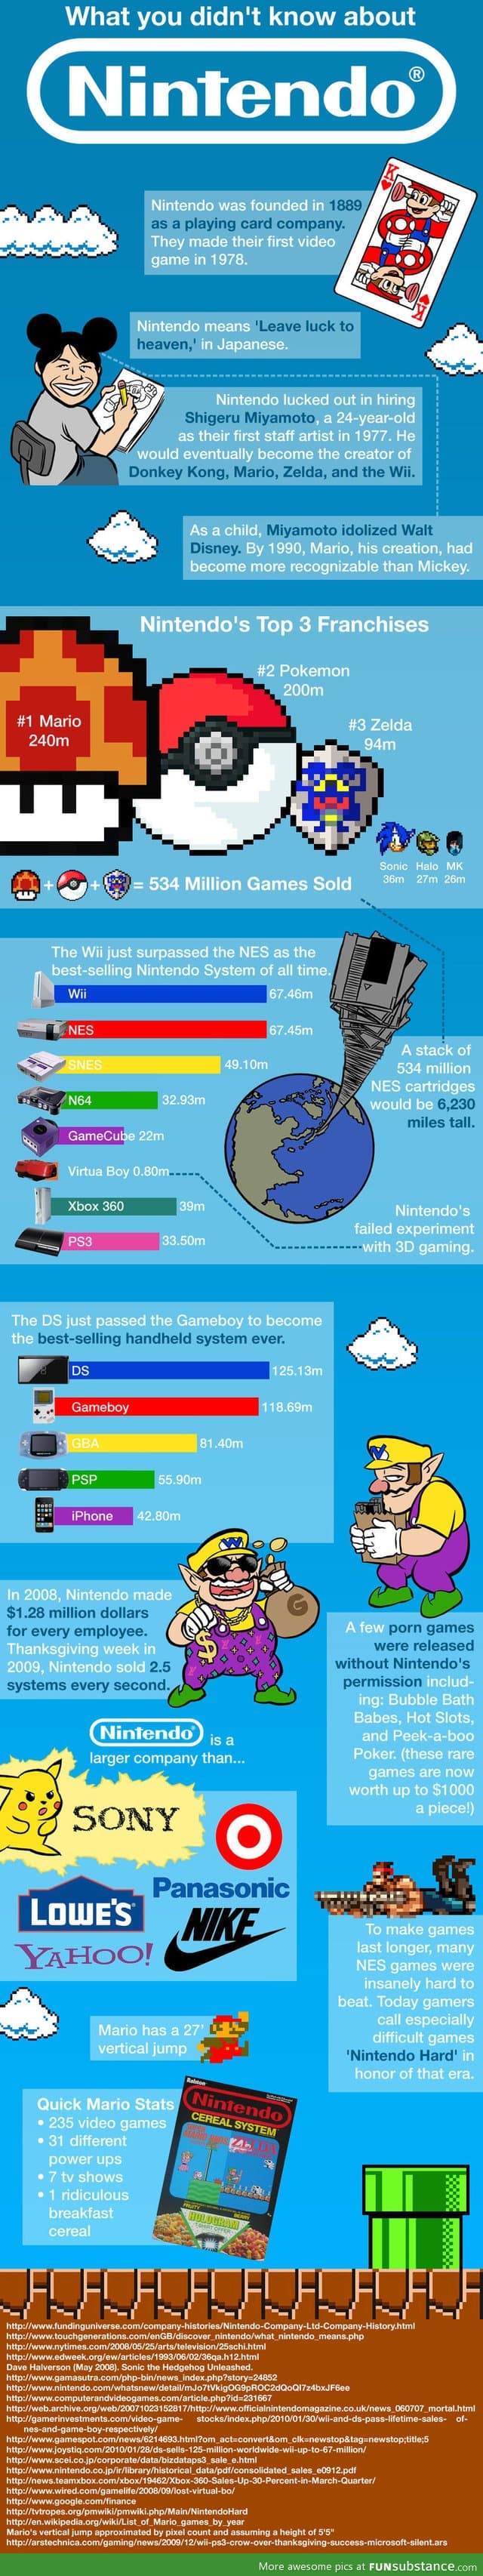 Nintendo facts